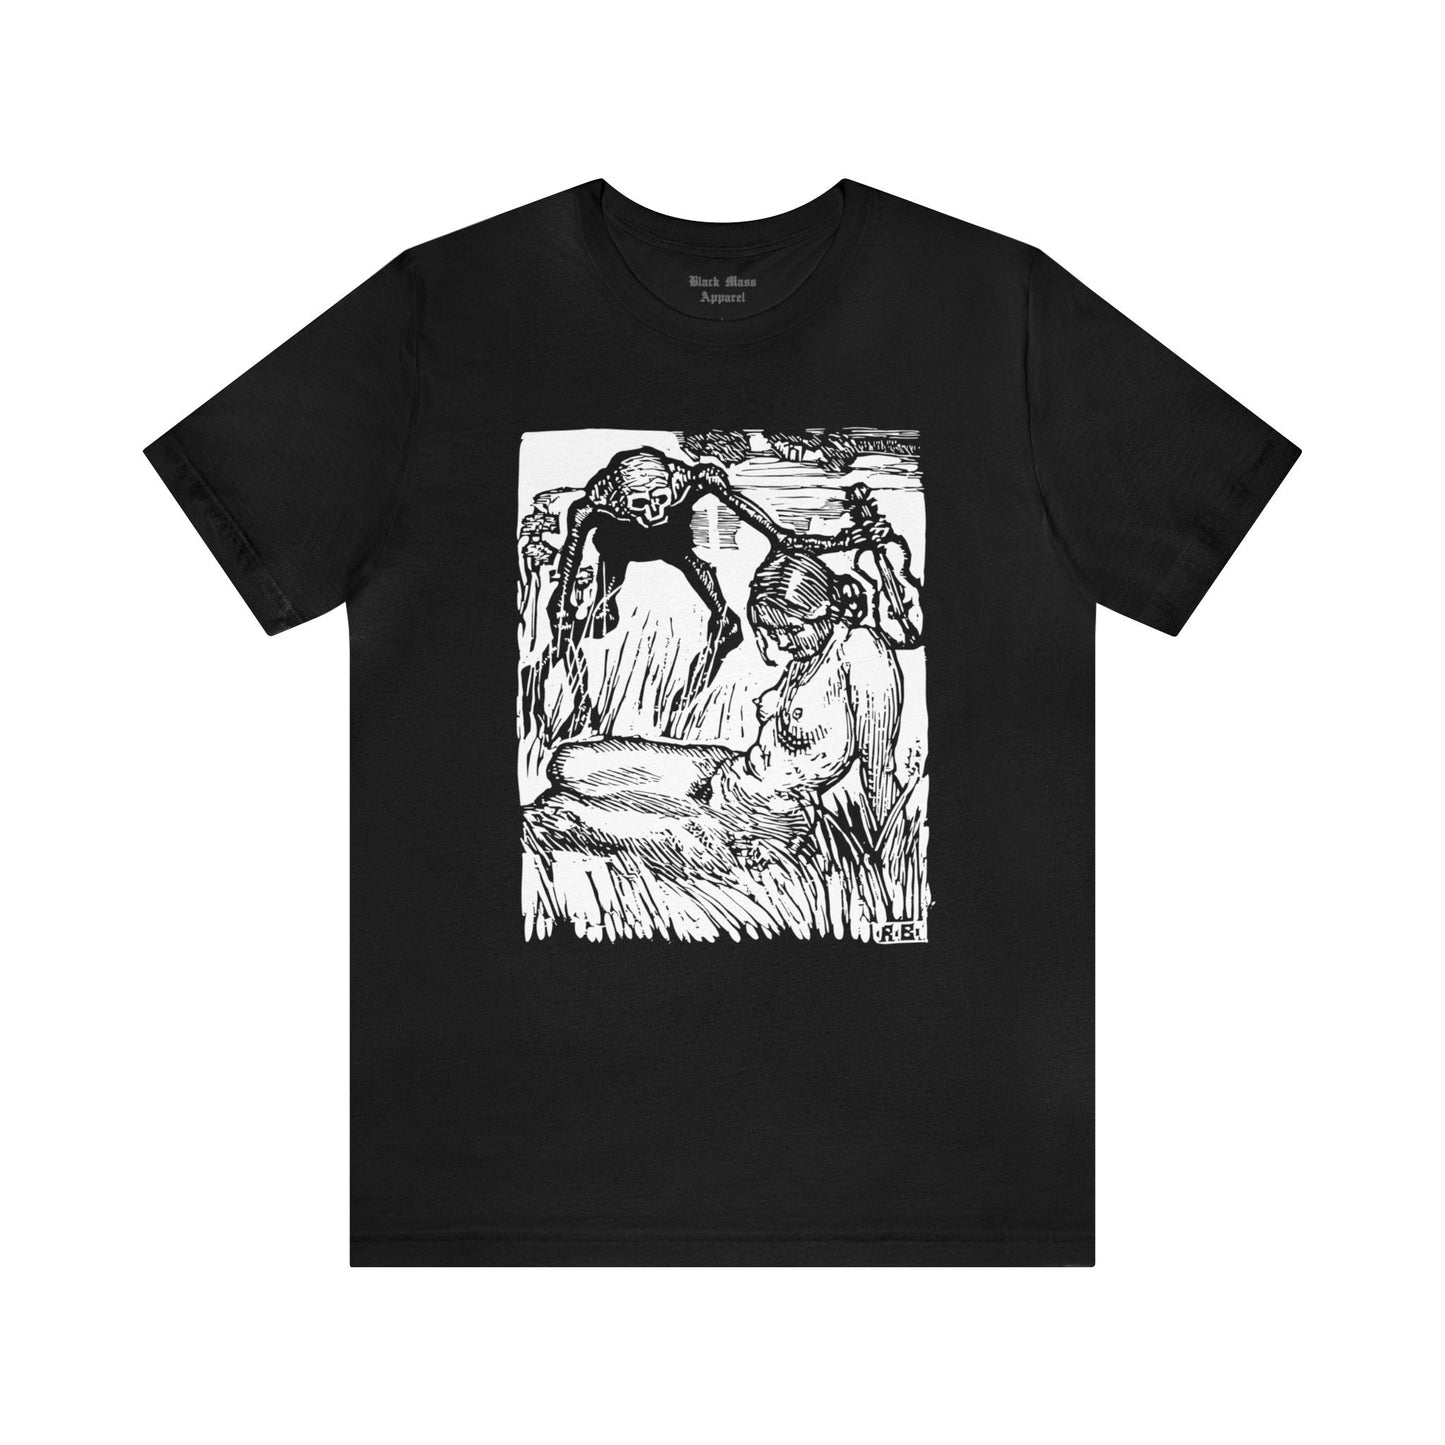 Totentanz I - Black Mass Apparel - T-Shirt